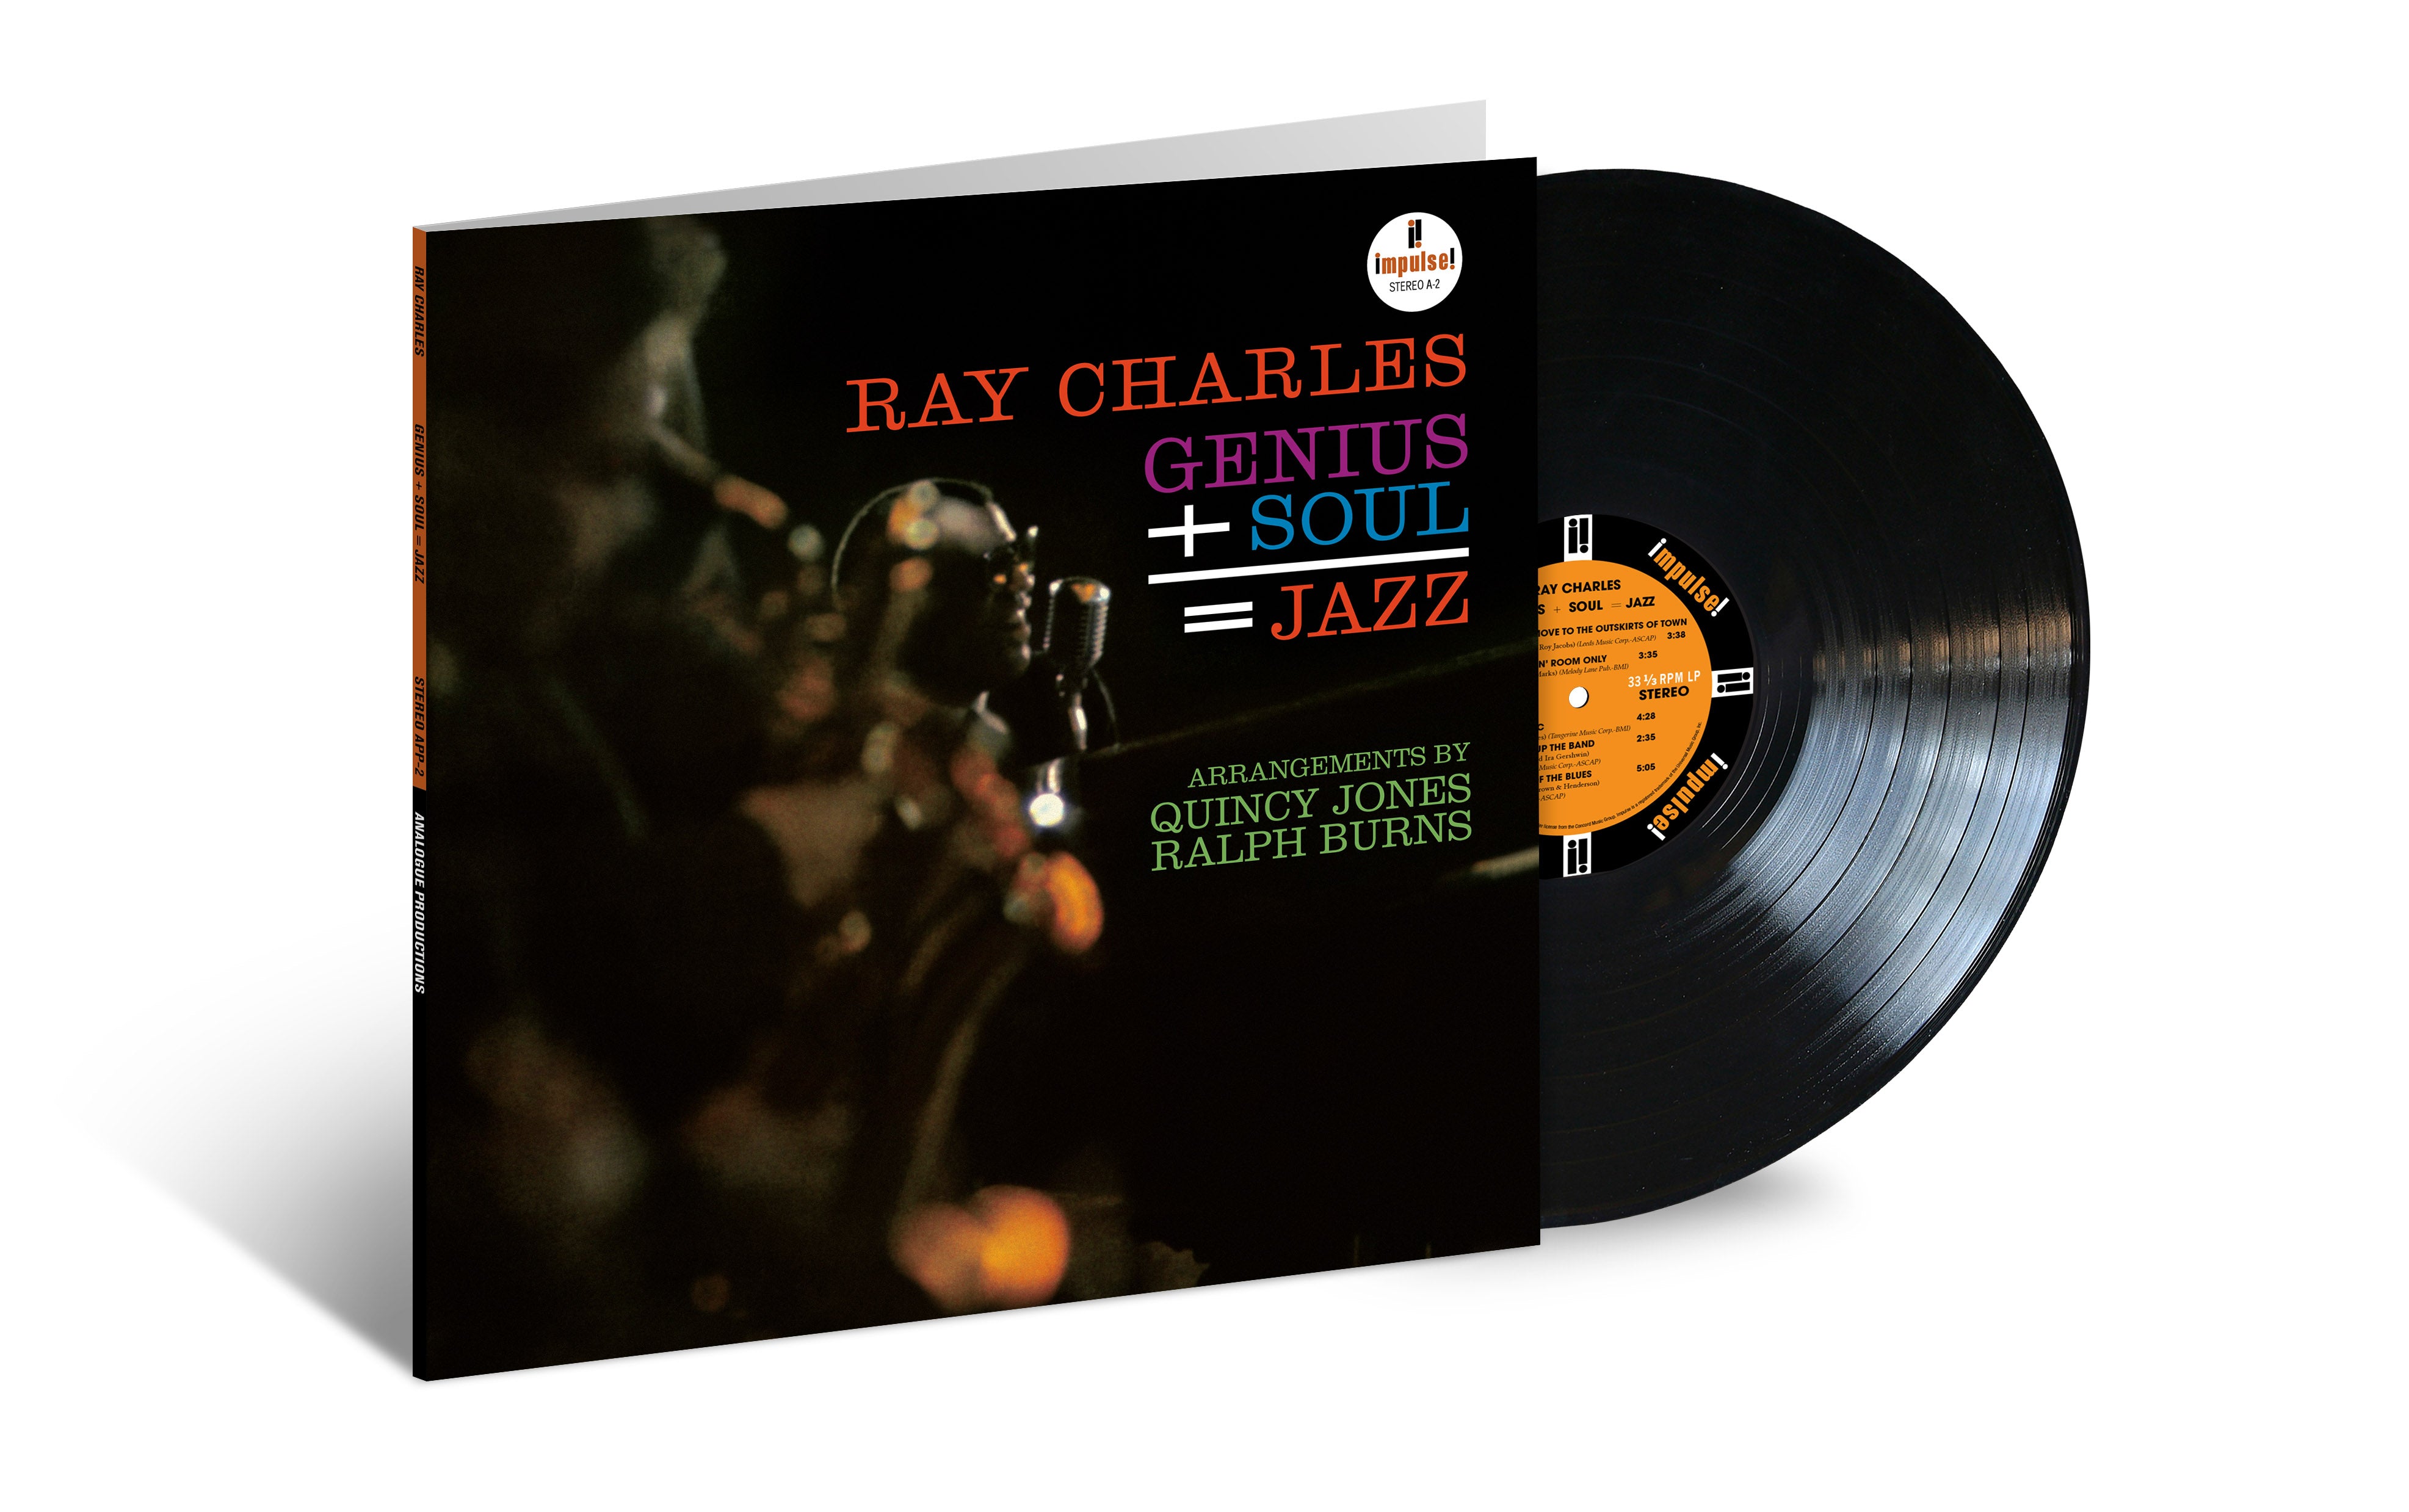 Ray Charles - Genius + Soul = Jazz (Impulse! - Verve Acoustic Sounds Series)